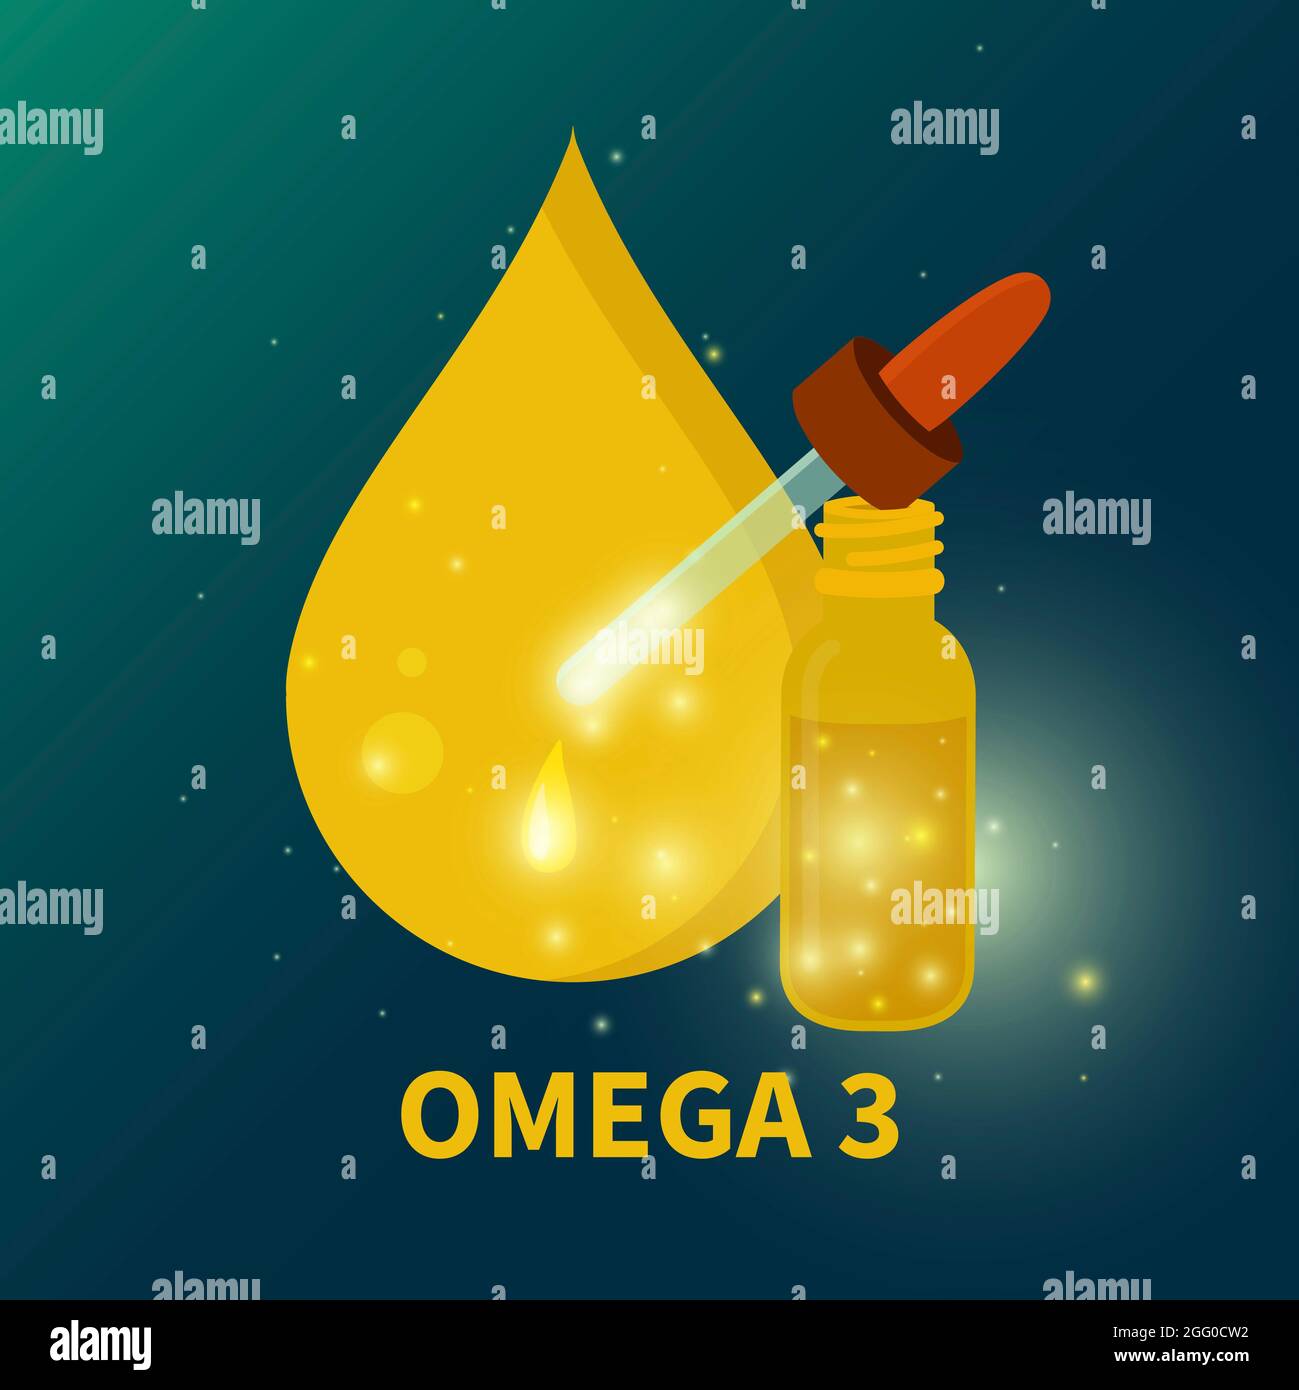 Omega 3 fish oil drop supplement, conceptual illustration. Stock Photo